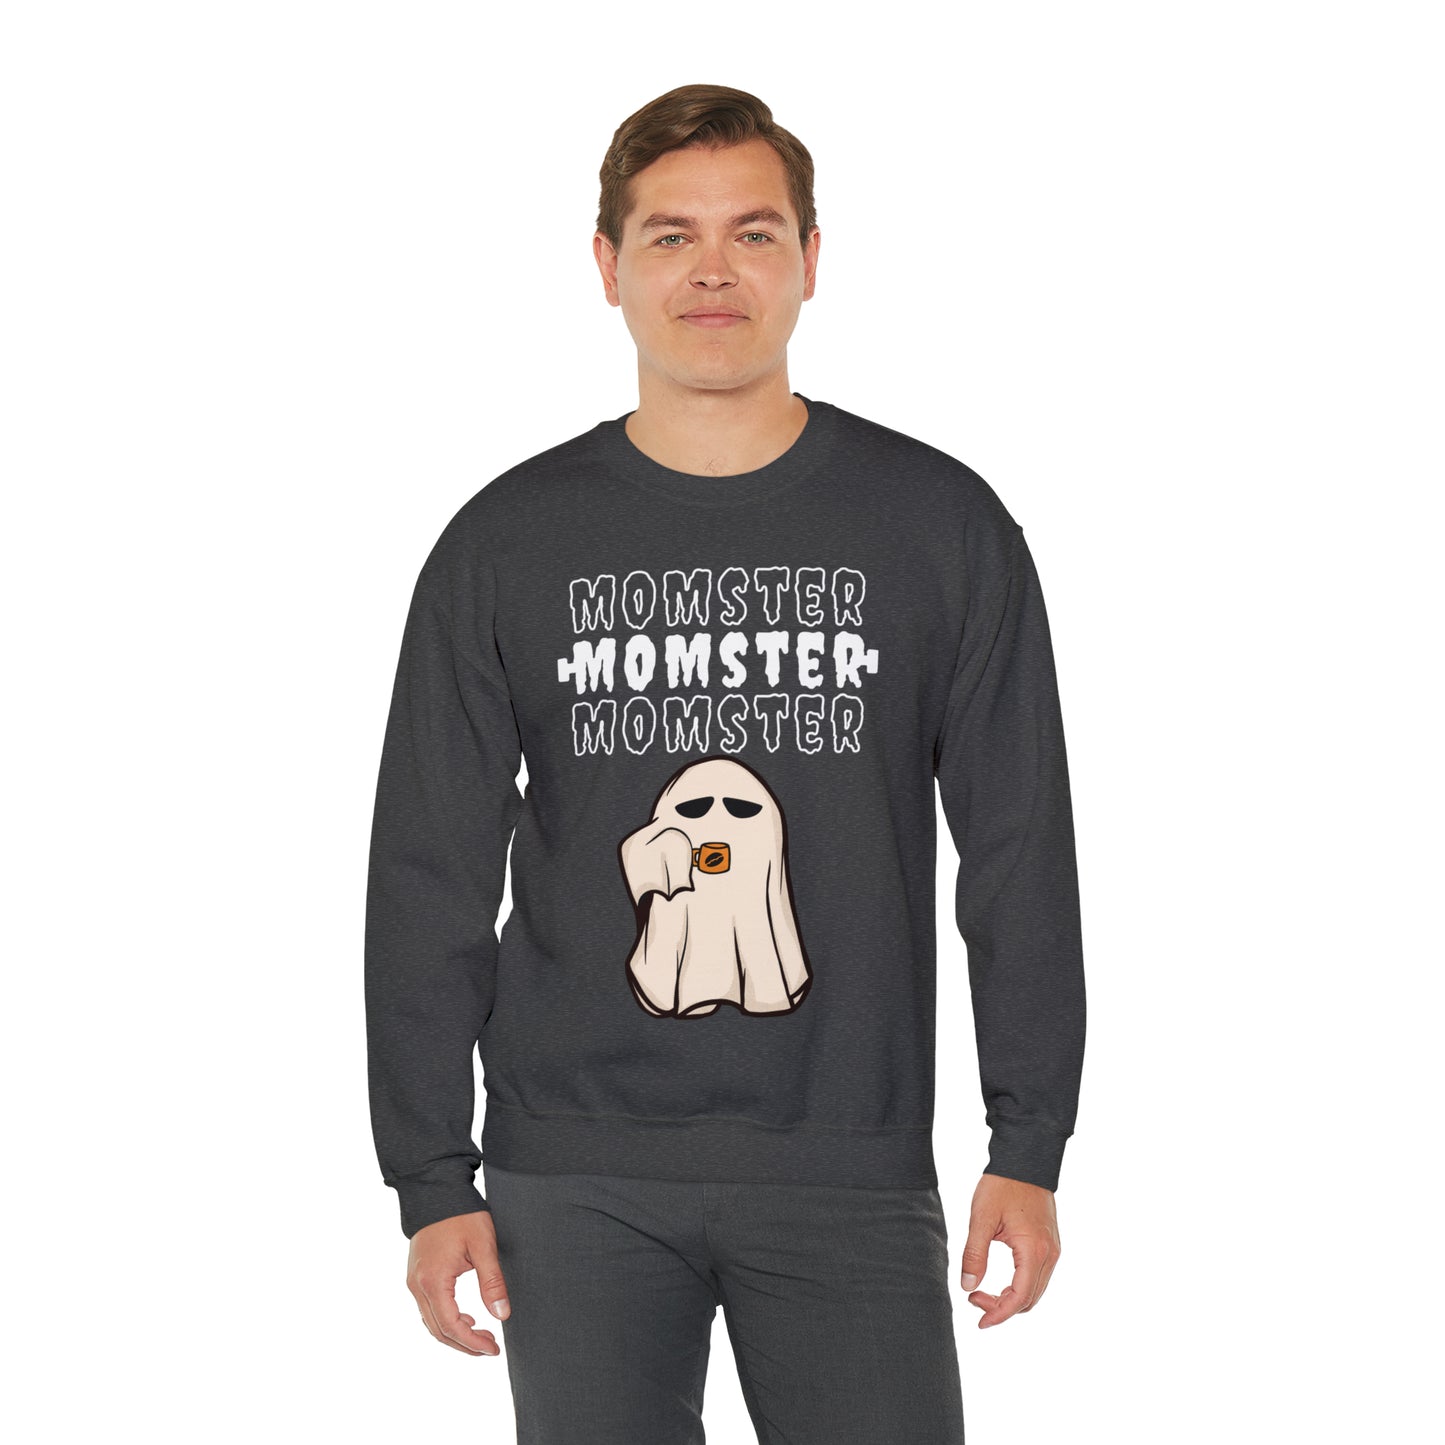 Momster Crewneck Sweatshirt